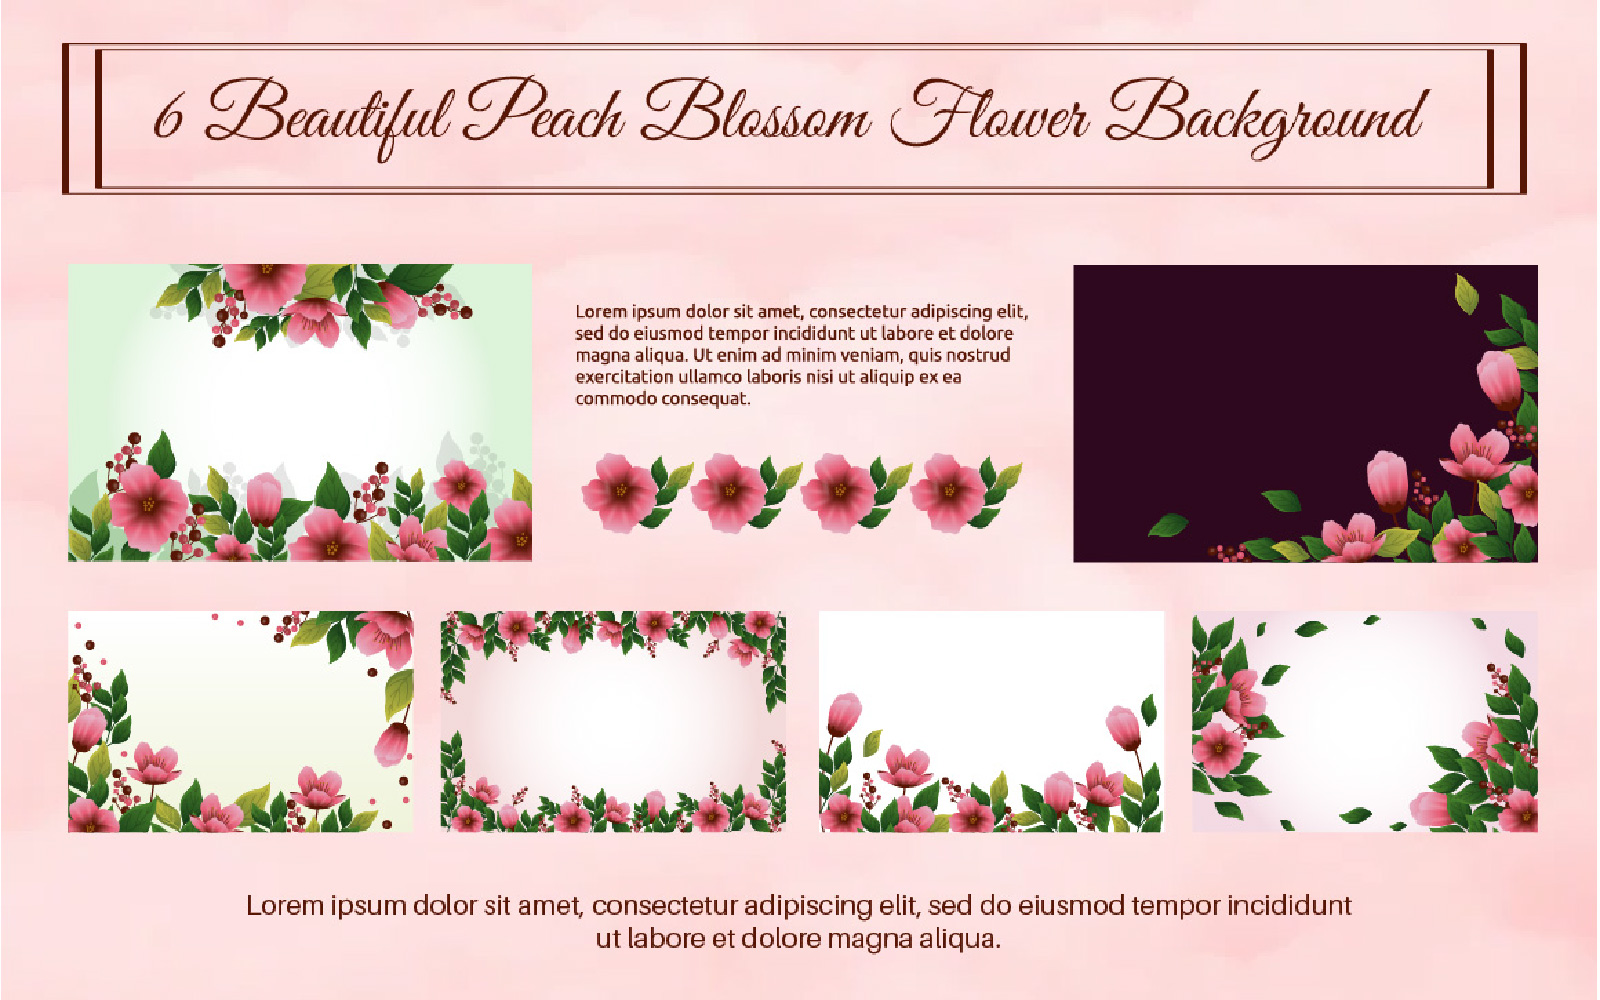 6 Beautiful Peach Blossom Flower Background